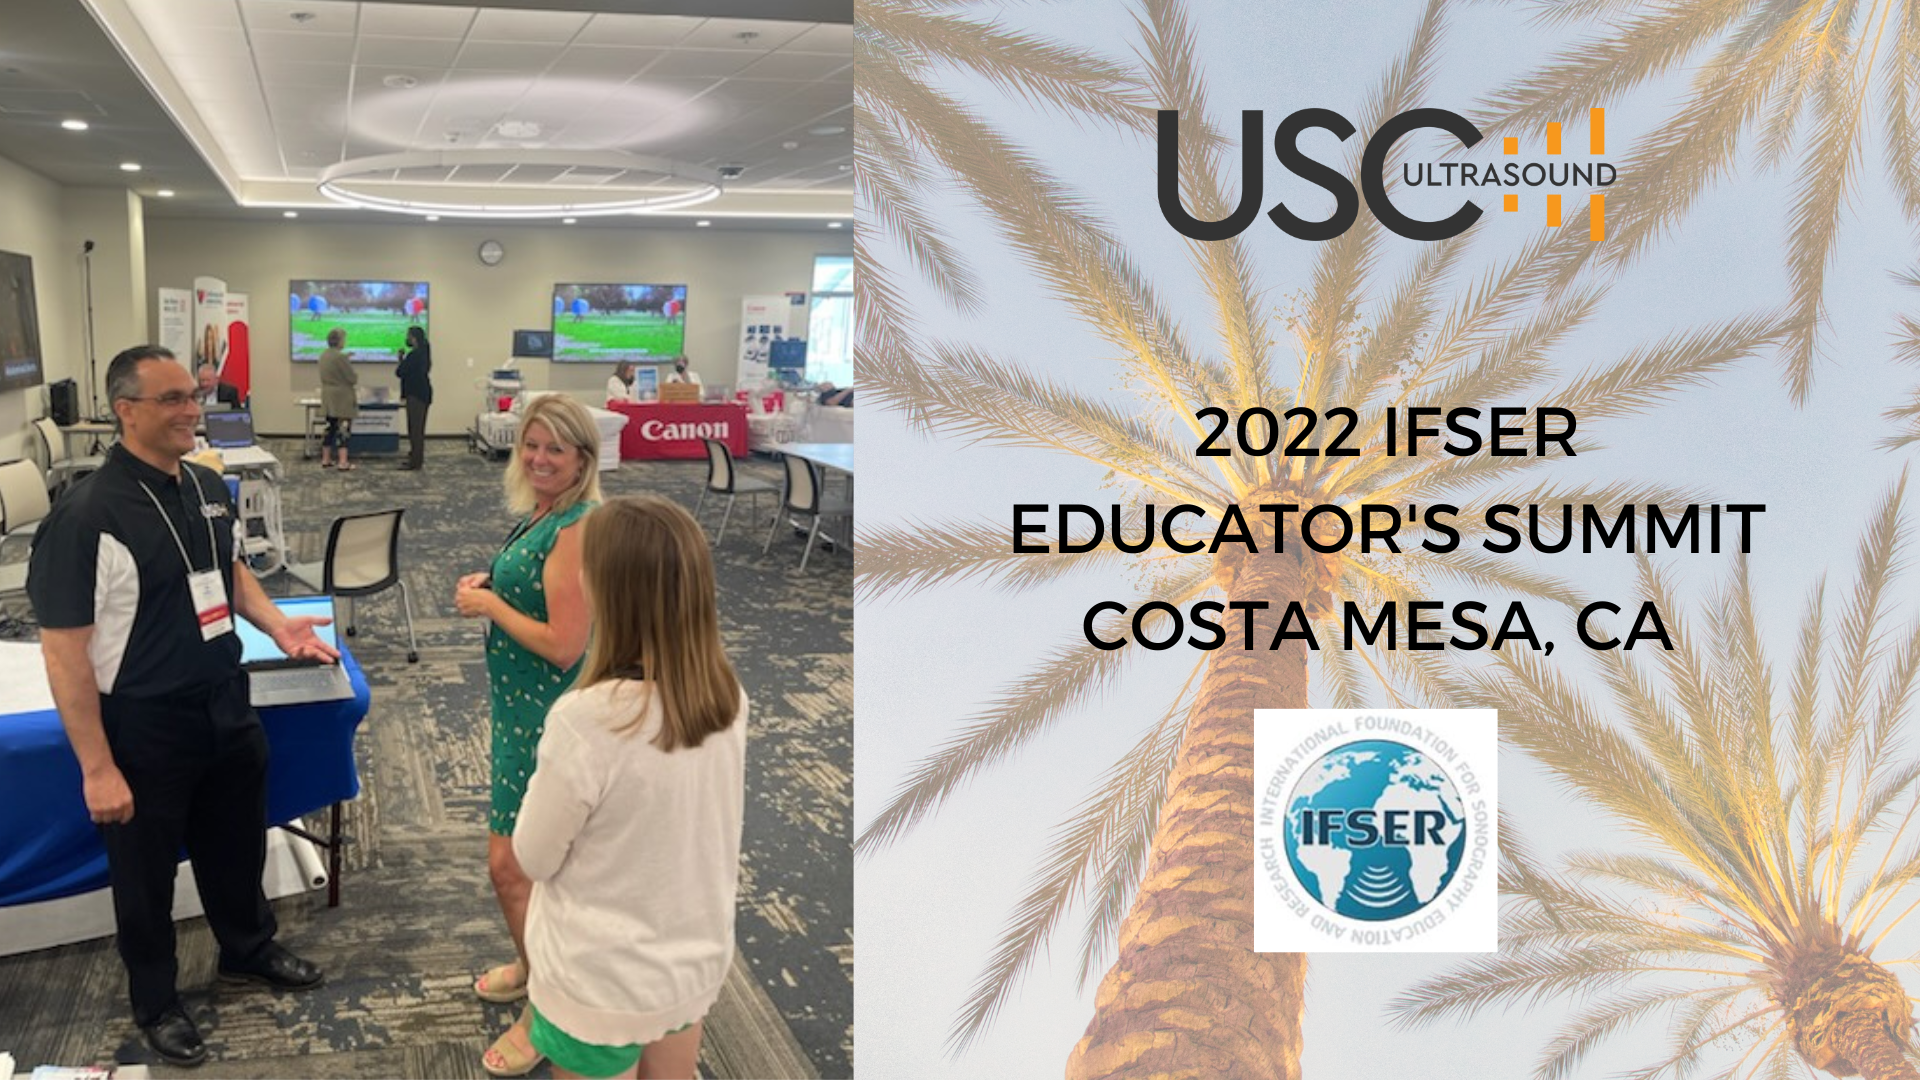 USC at the IFSER 2022 Educator’s Summit